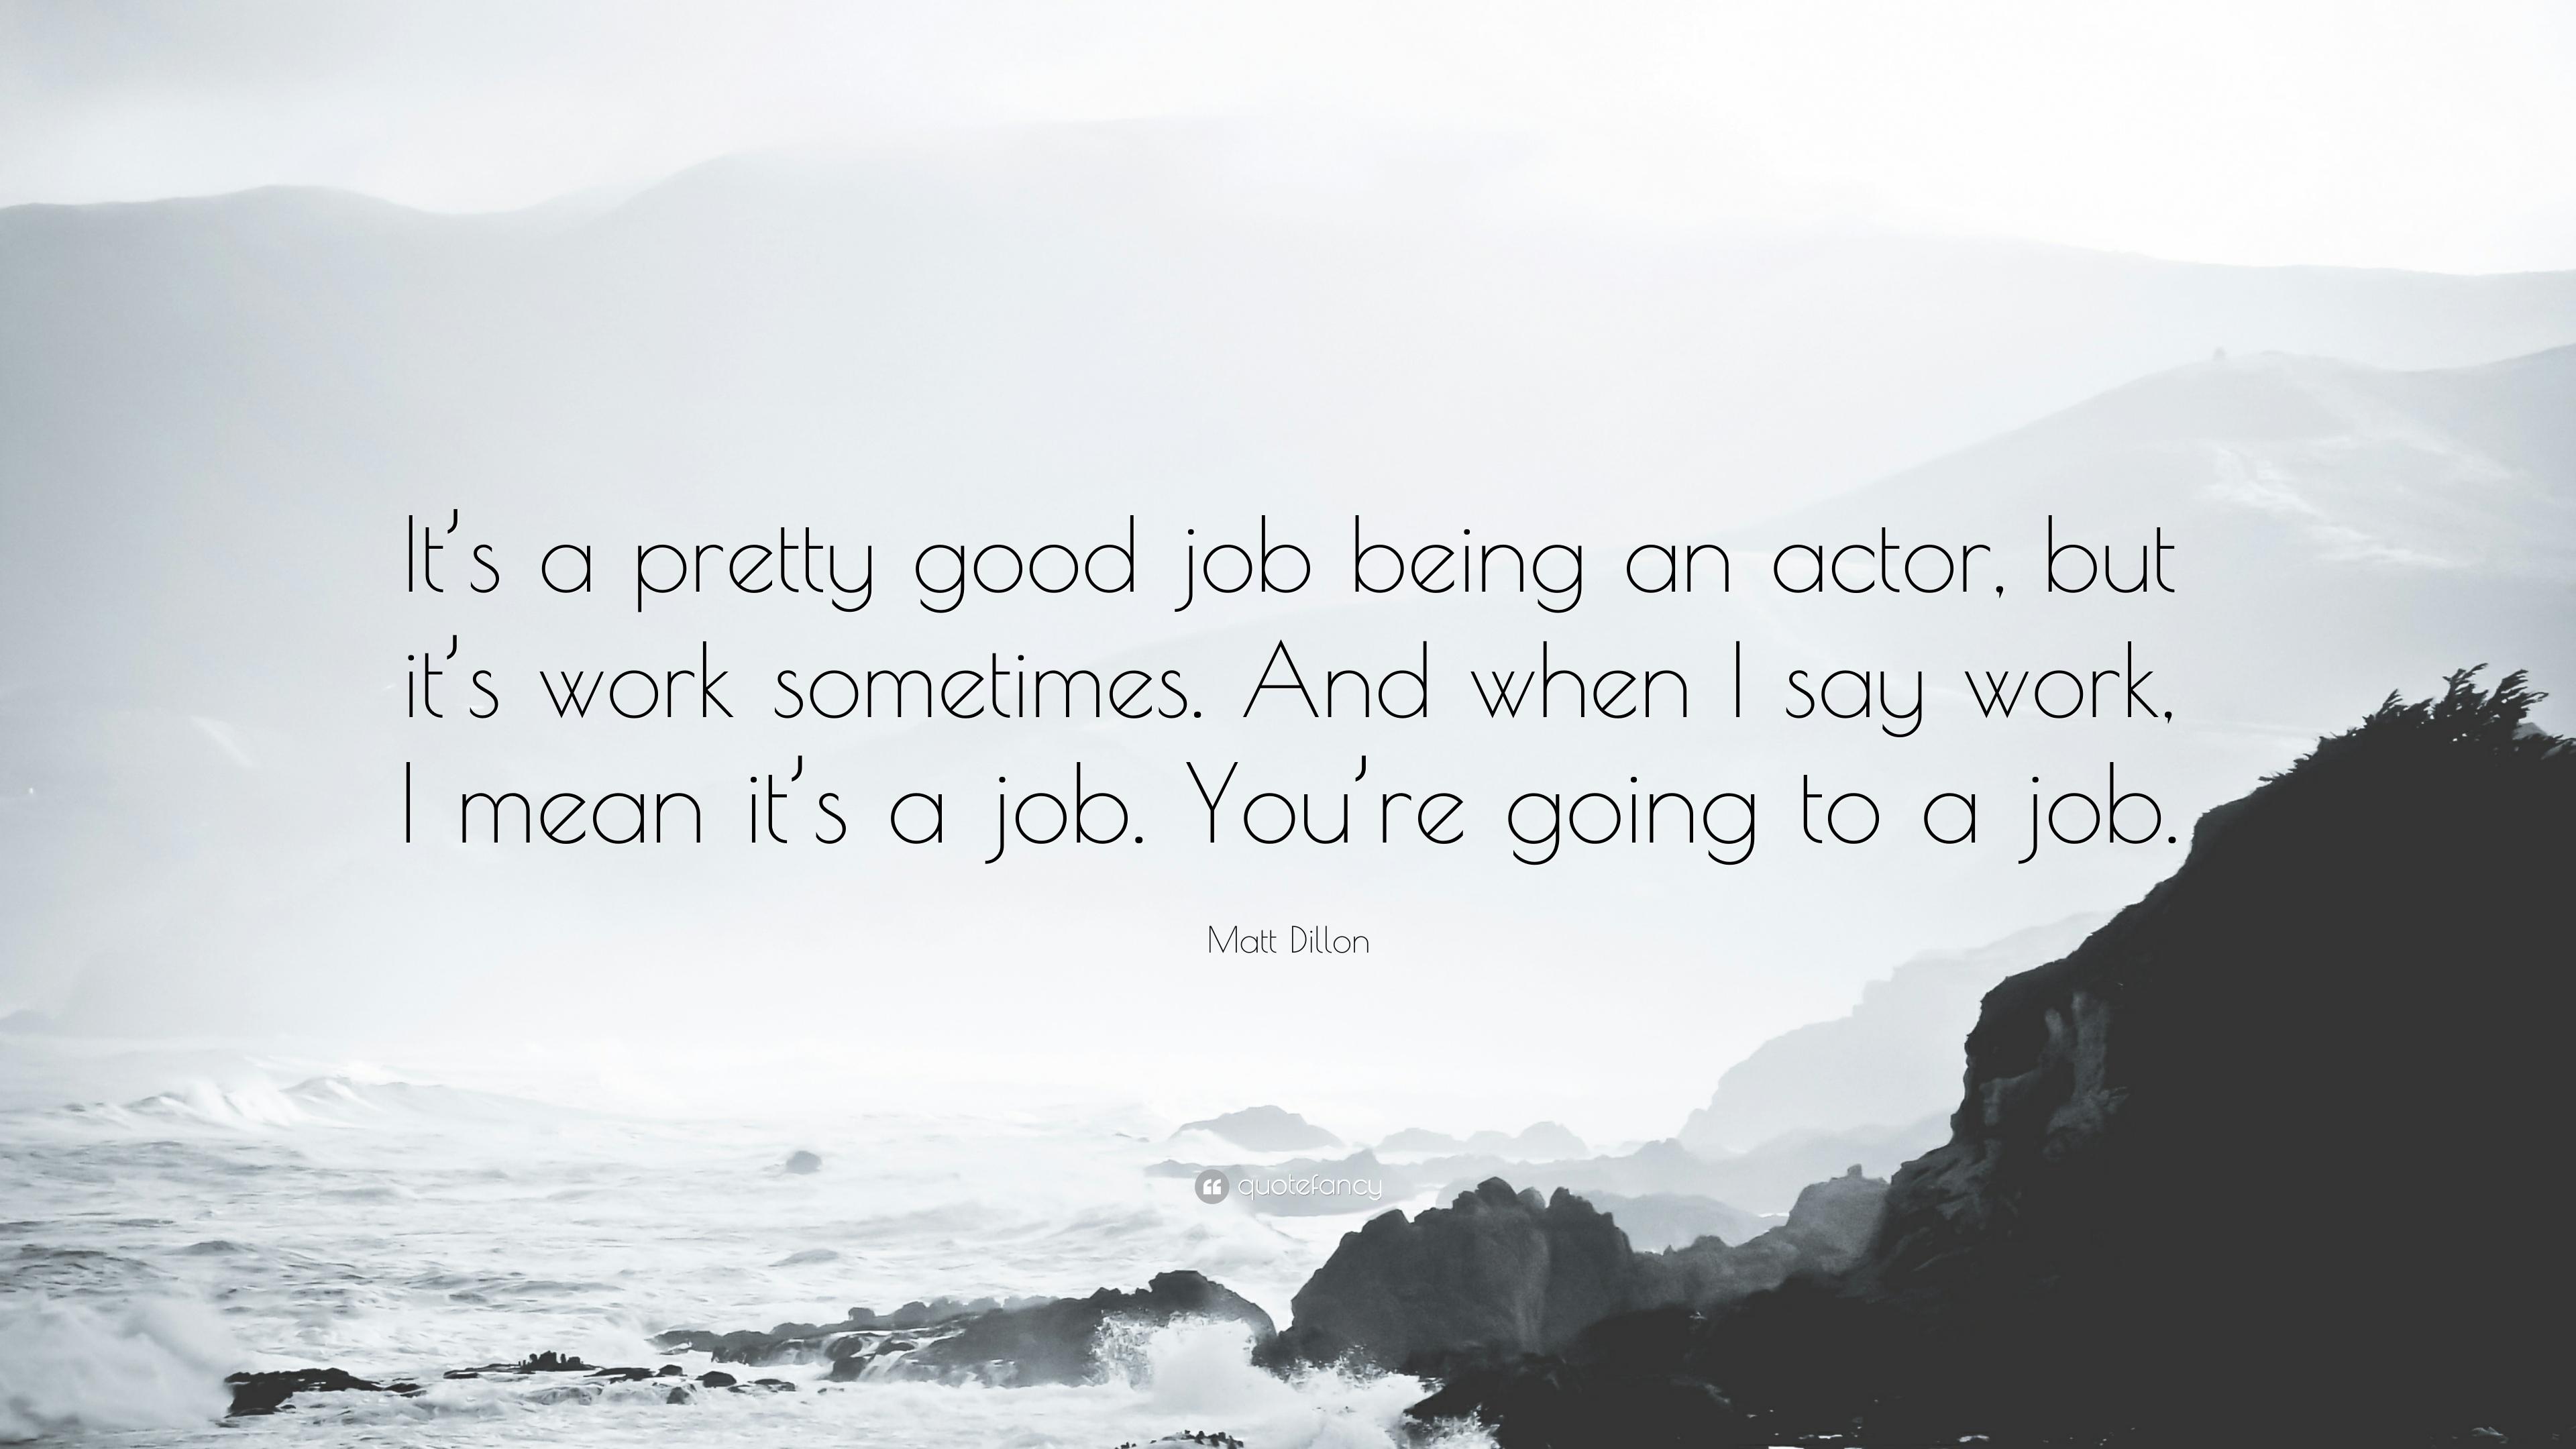 Matt Dillon Quote: “It's a pretty good job being an actor, but it's